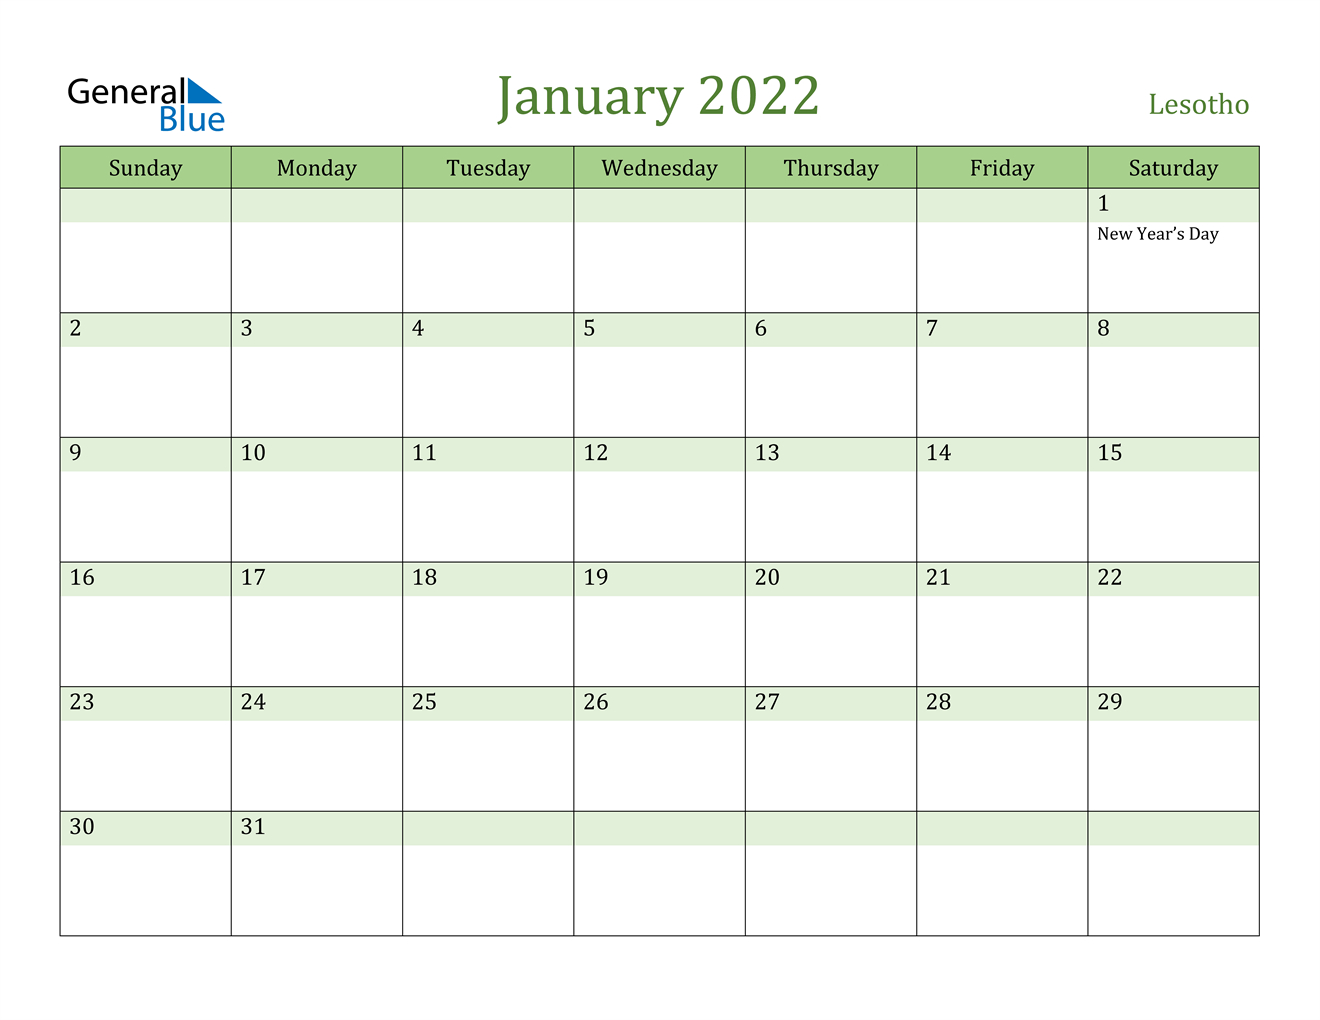 January 2022 Calendar - Lesotho